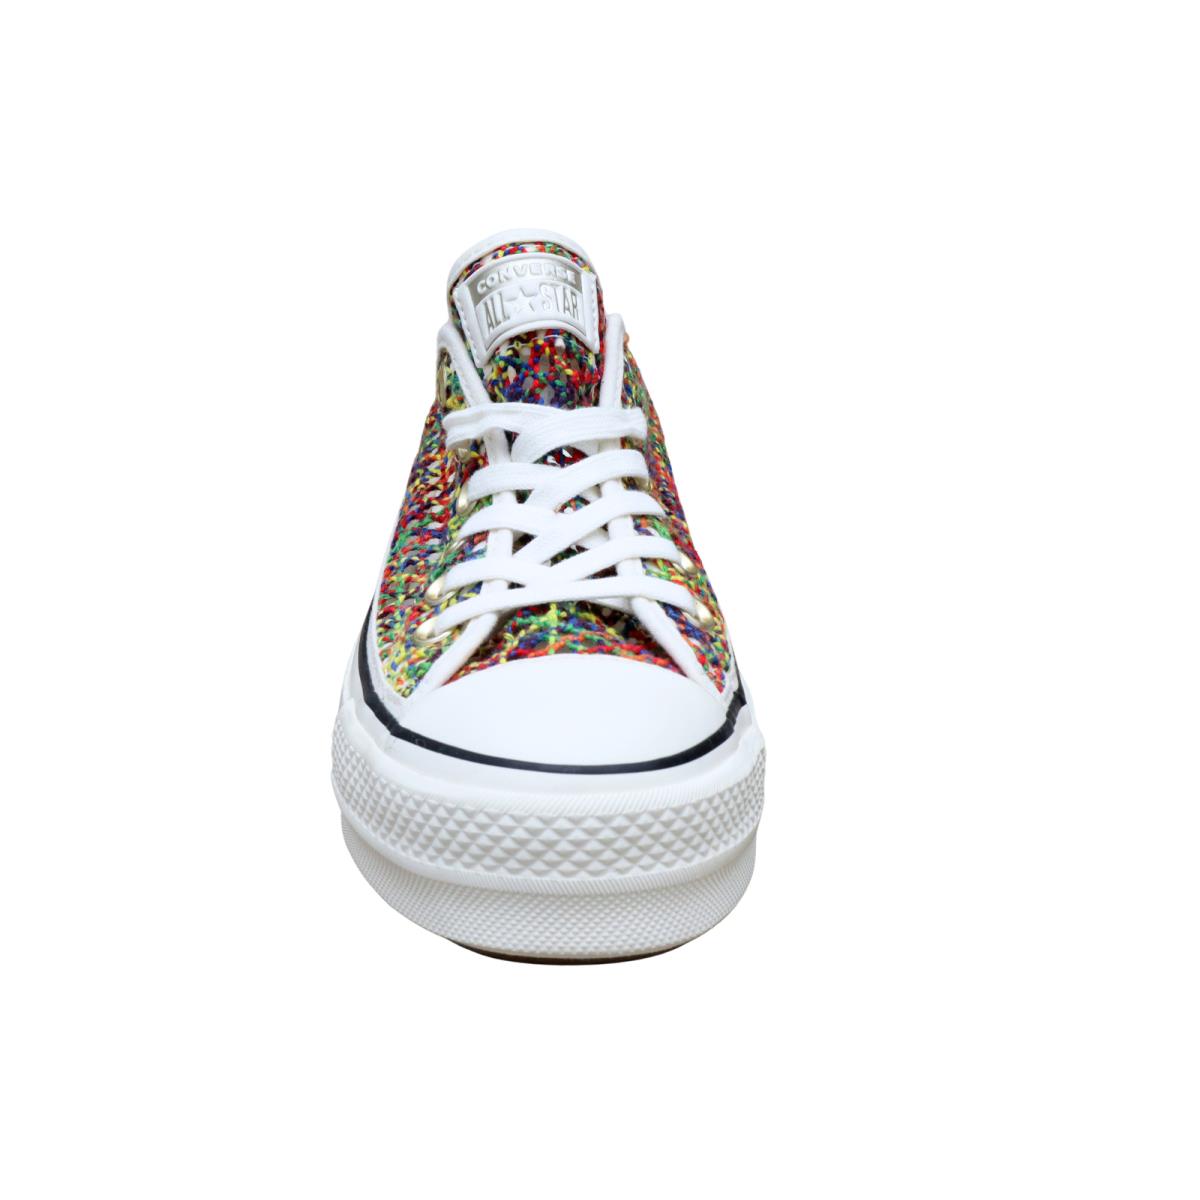 Converse Chuck Taylor All Star Women Multicolor Sneaker Shoes 564874C SZ 8.5 - Multicolor